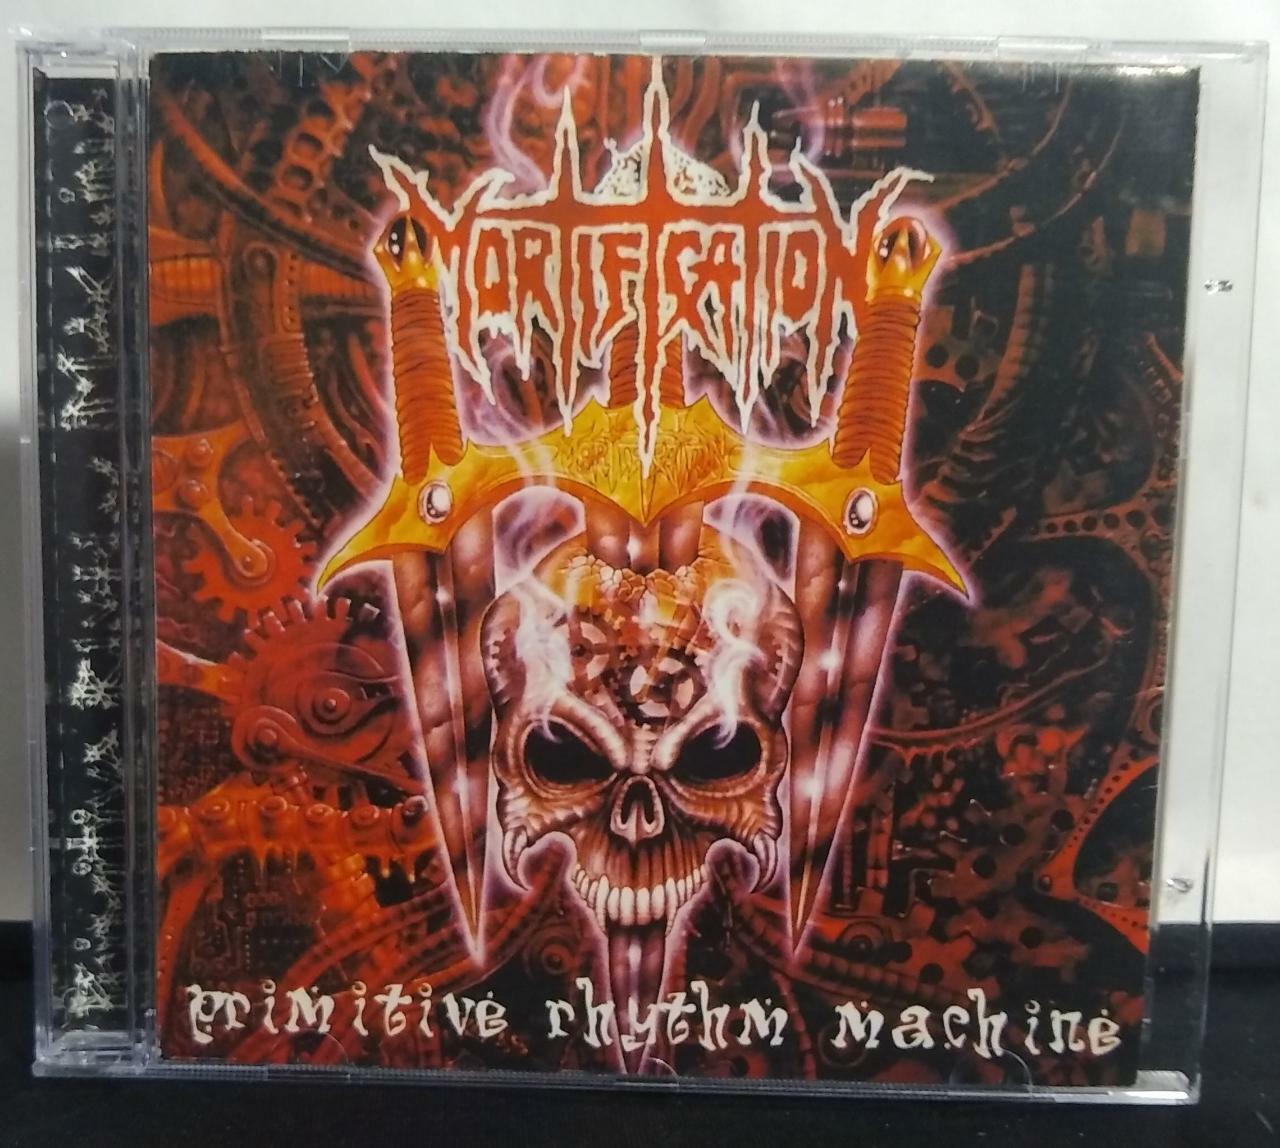 CD - Mortification - Primitive Rhythm Machine